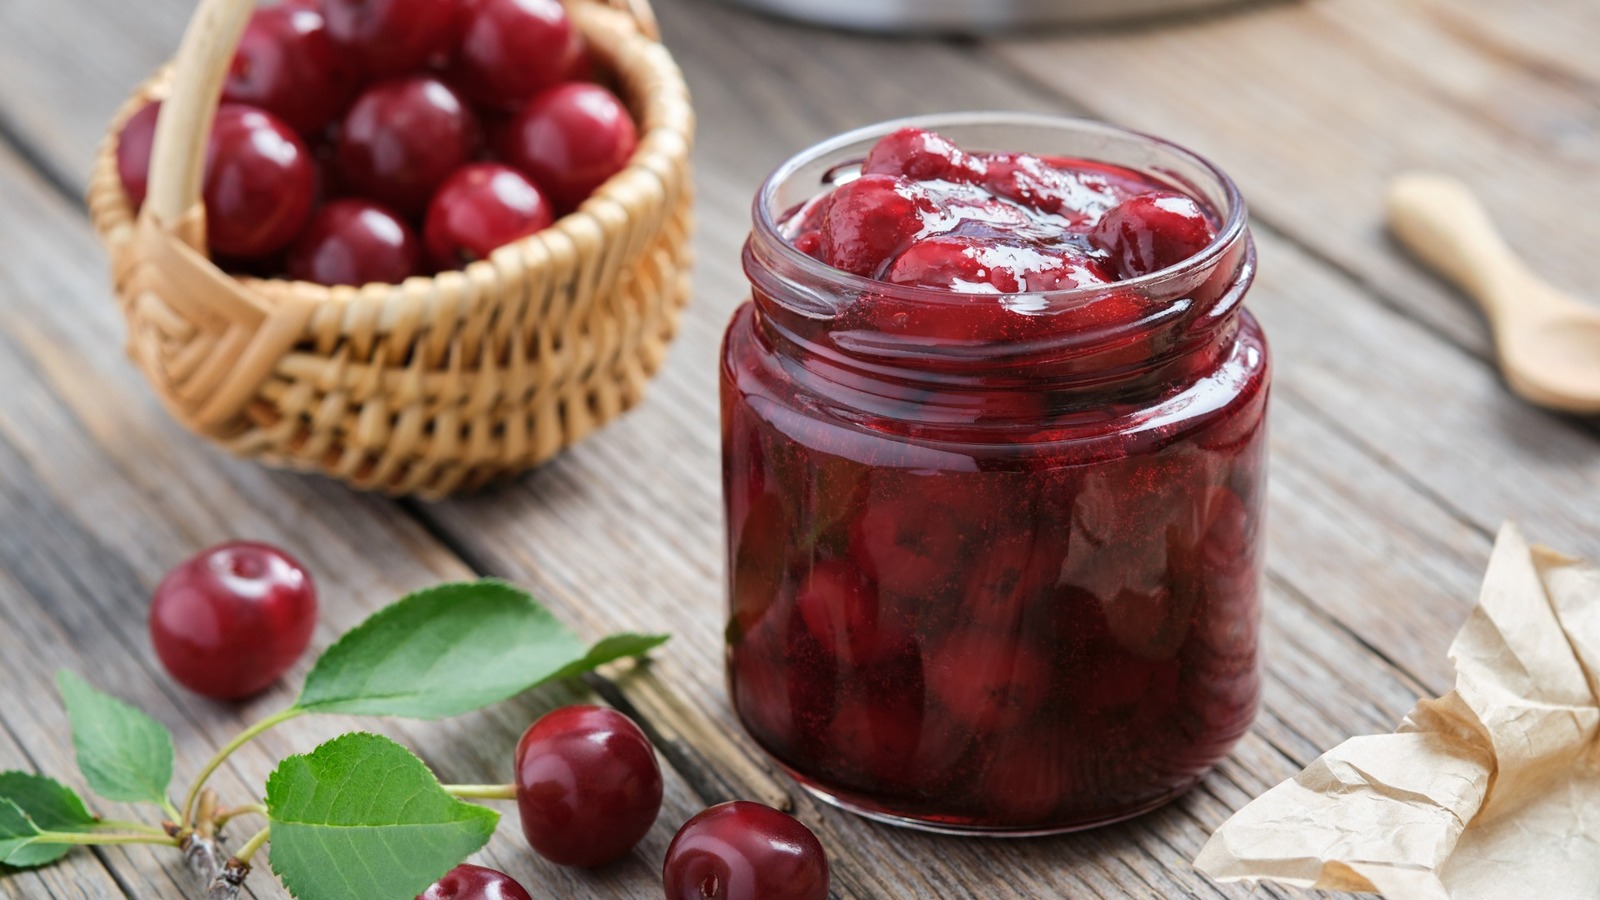 The Health Benefits of Tart Cherries